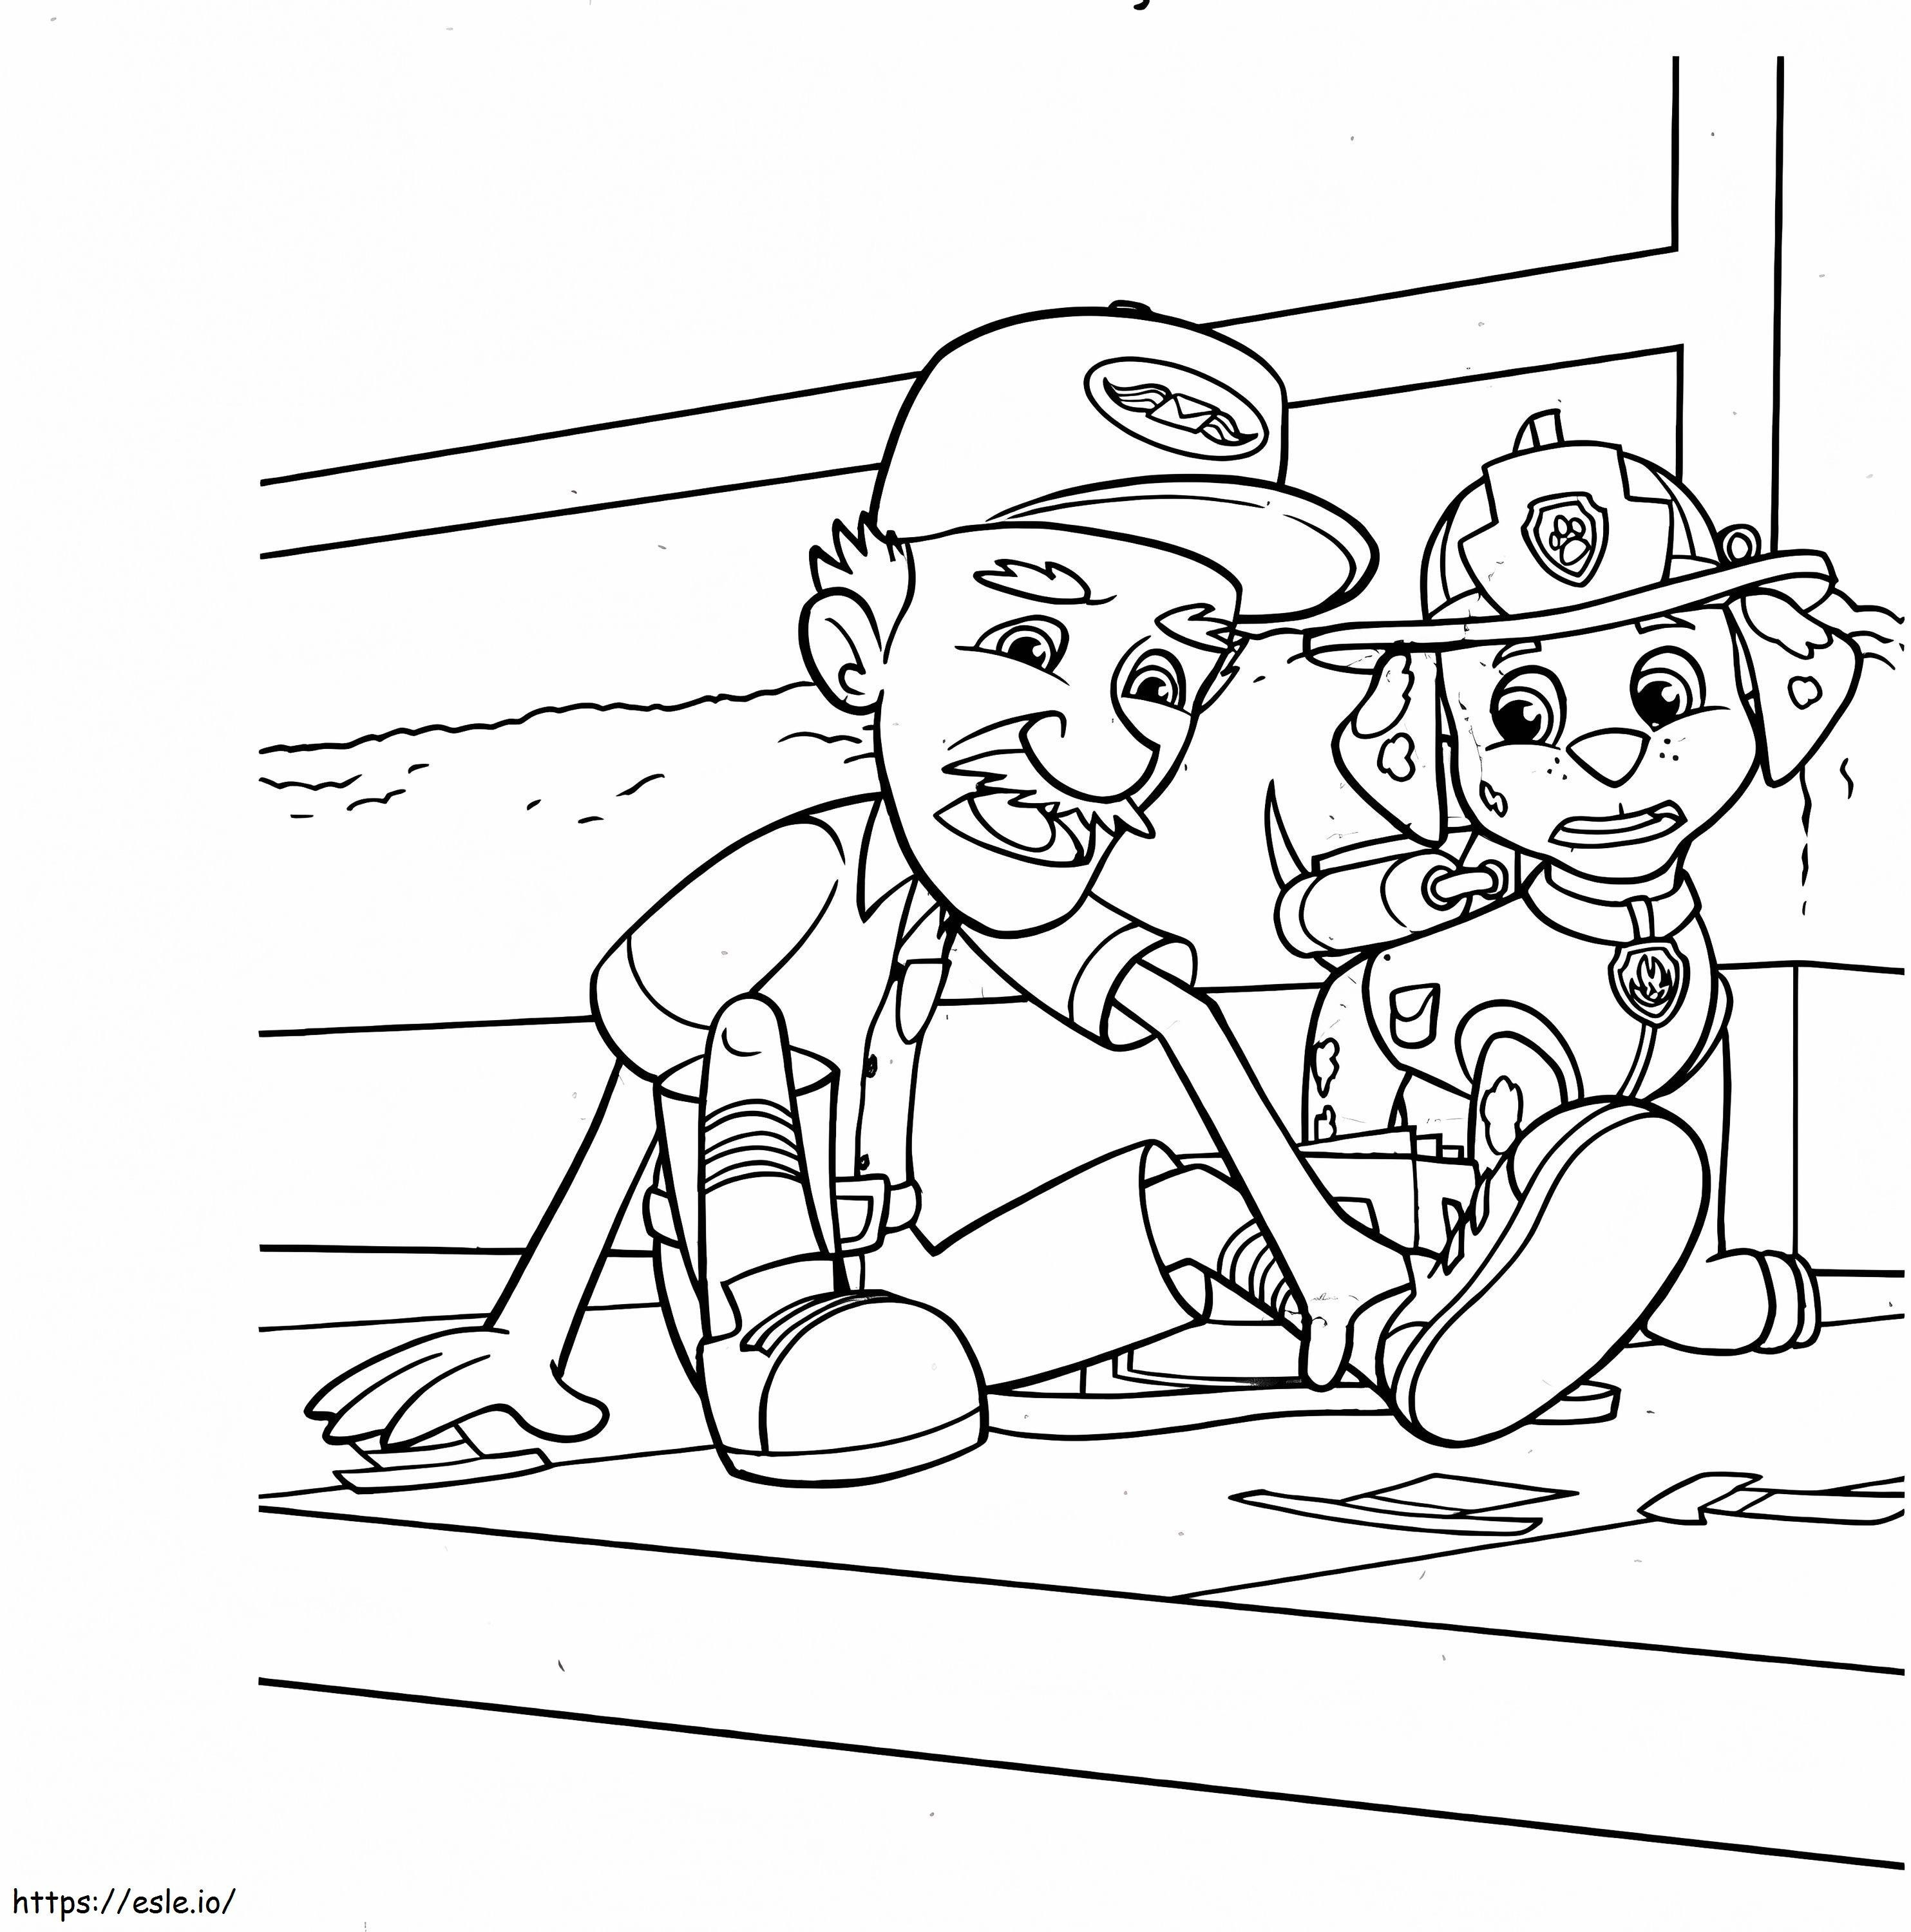 Marshall And Mr. Postman coloring page